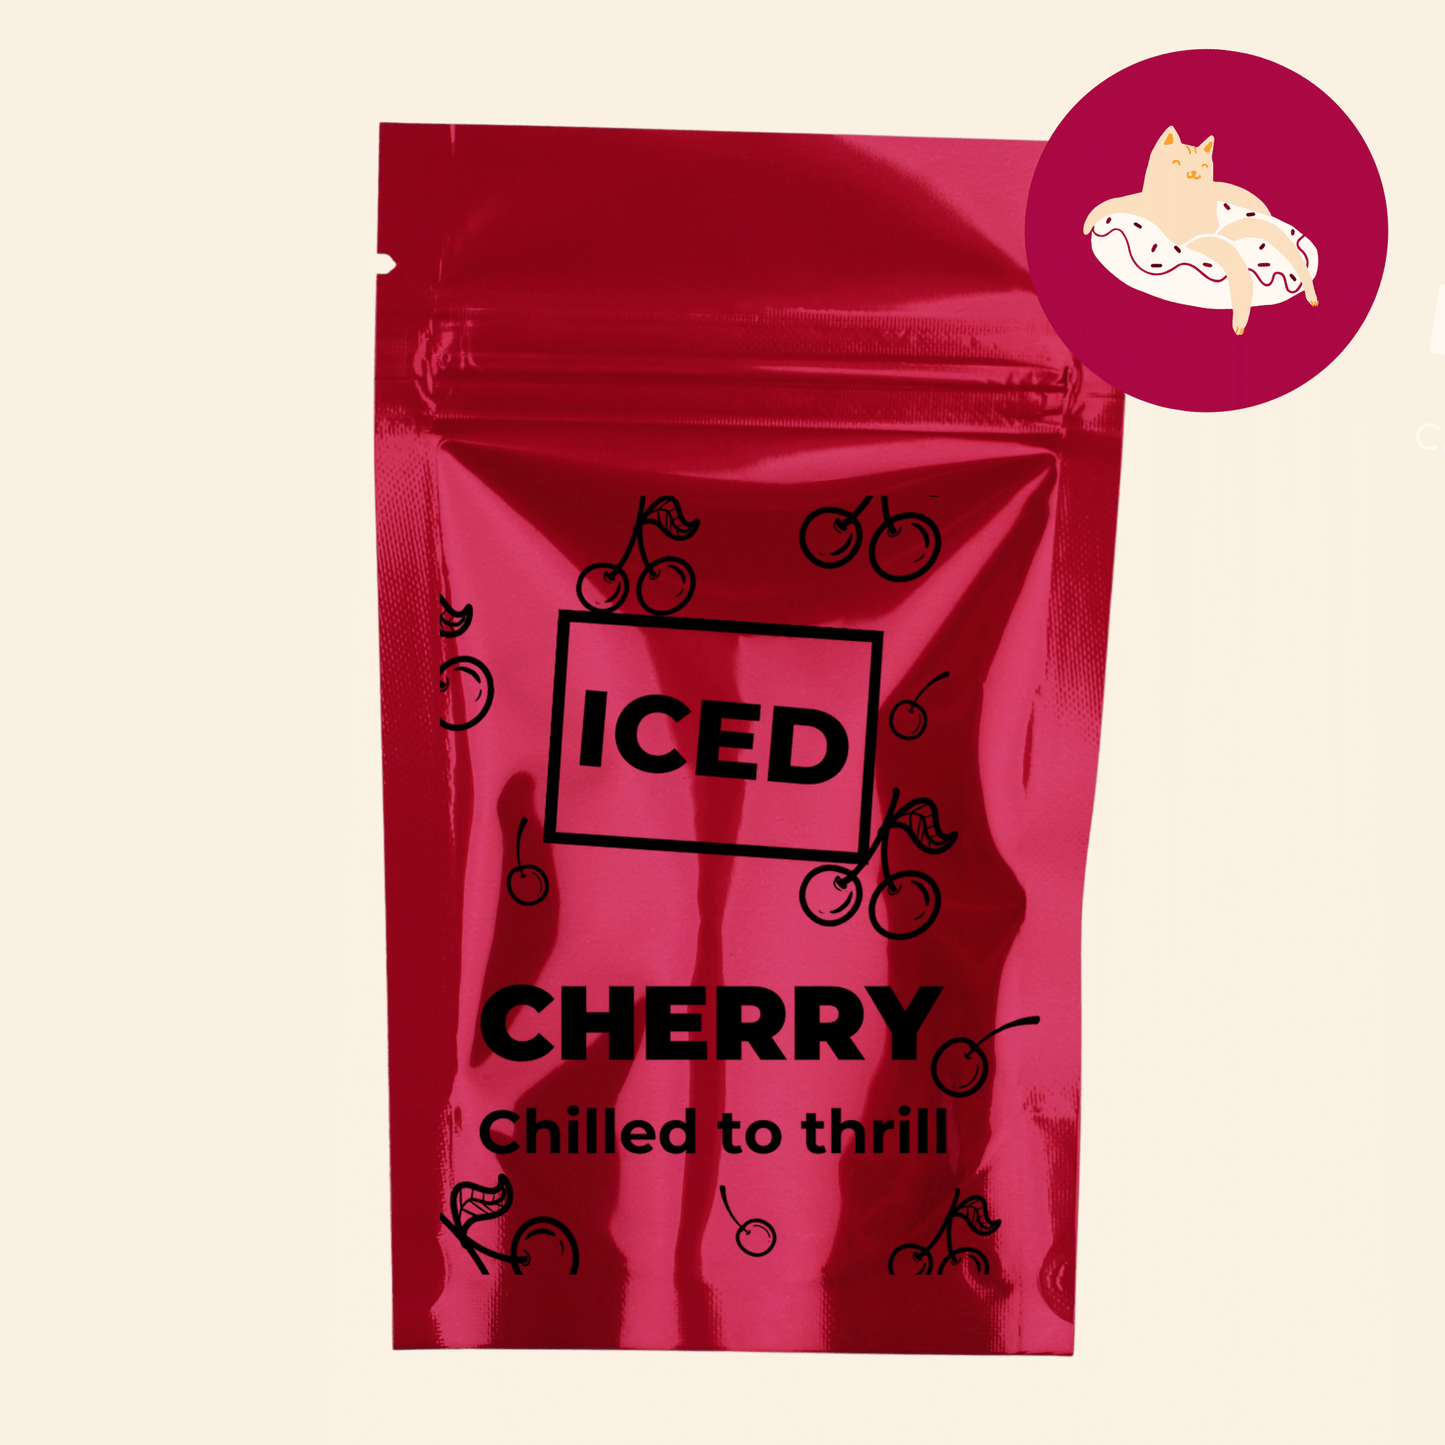 Cherry Iced Tea. Details ->